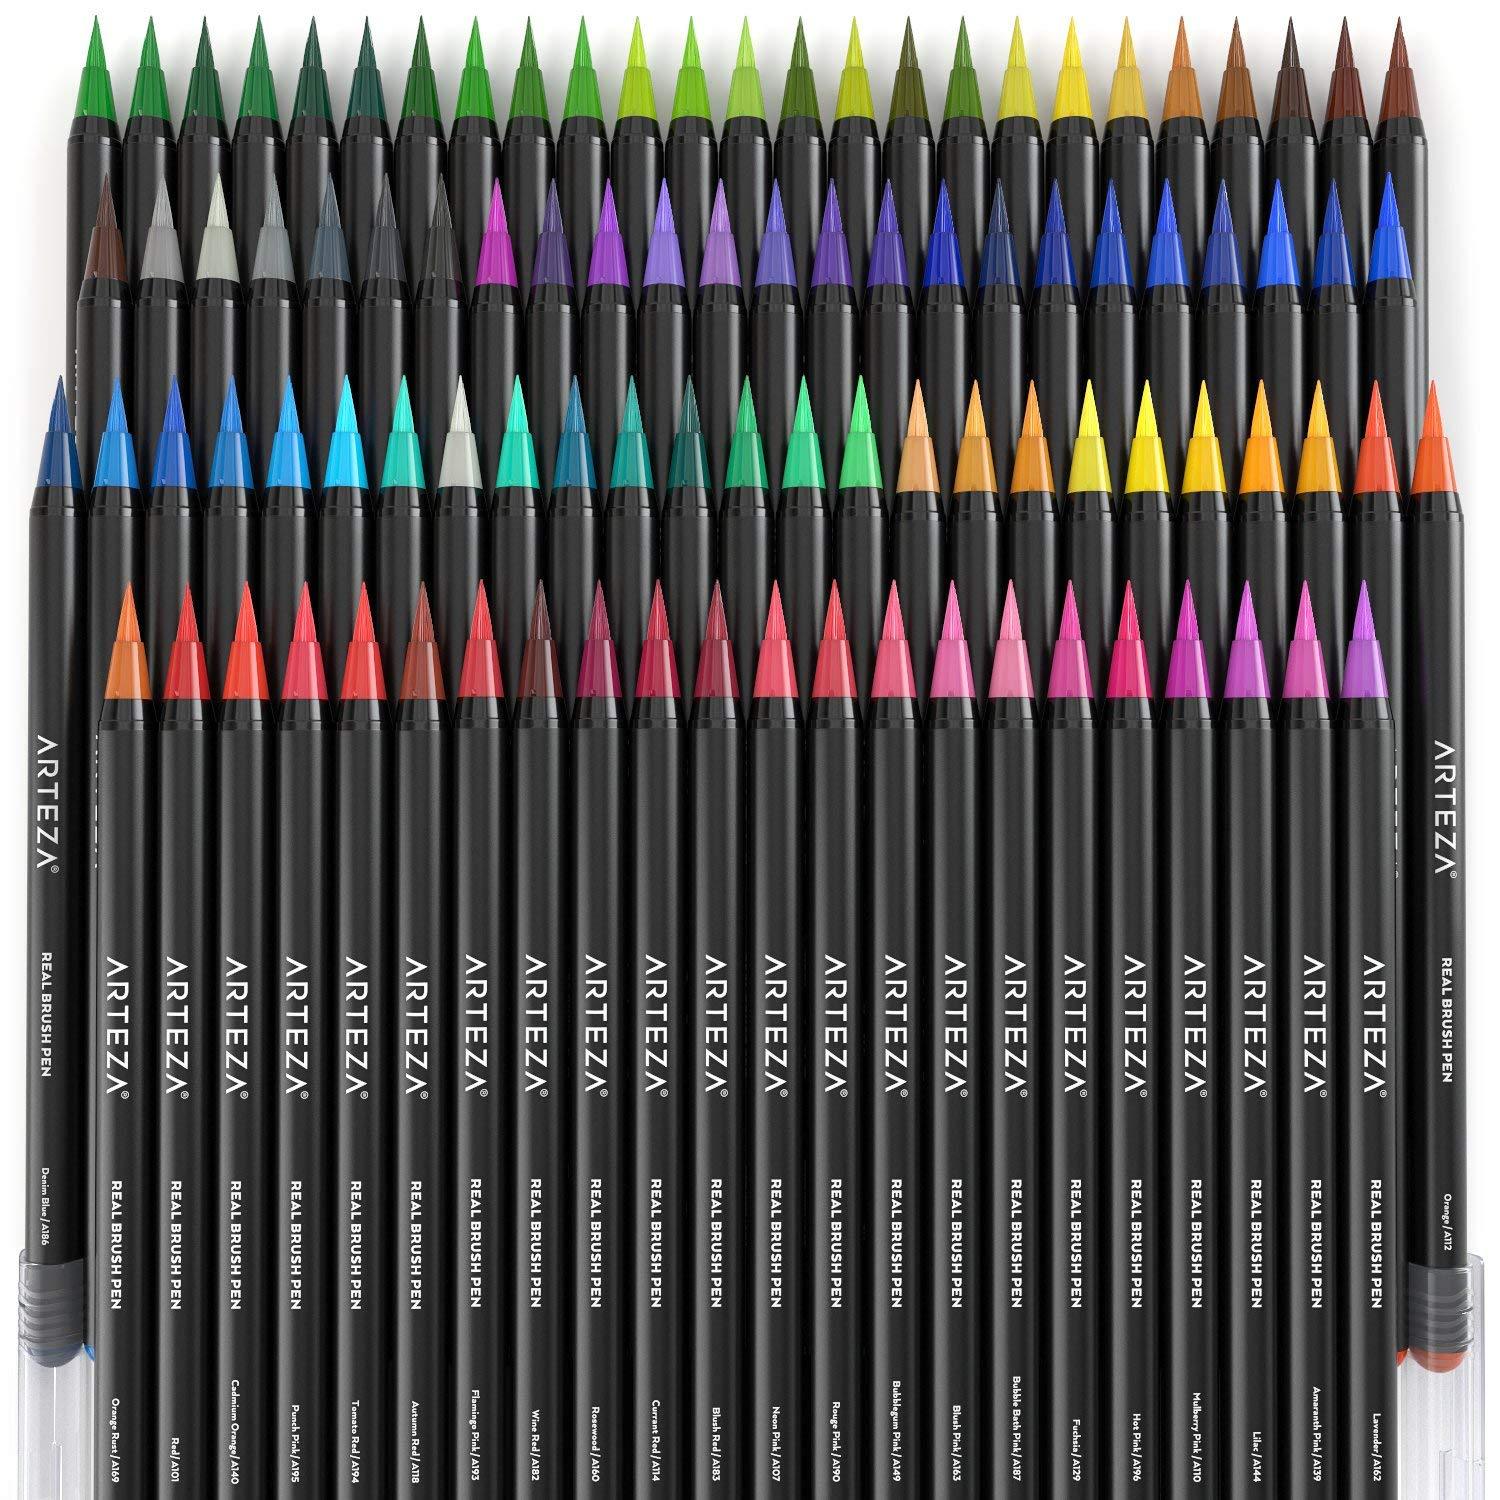 16 Arteza Real Brush Pen Techniques –